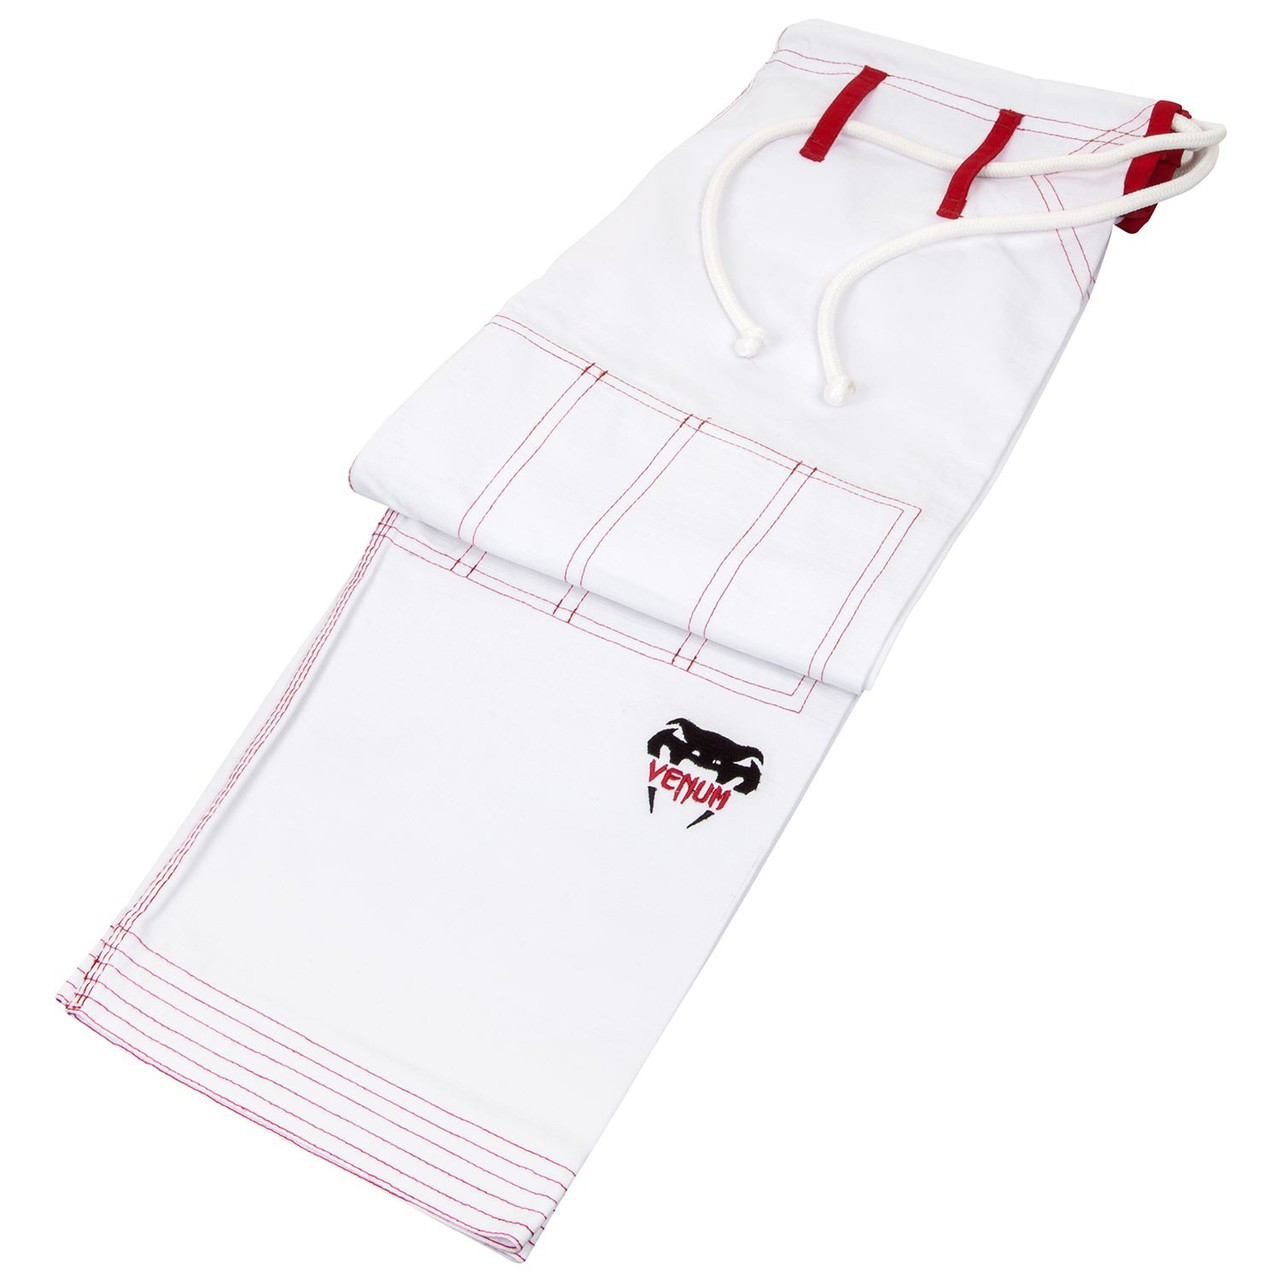 Pants Venum Elite Light BJJ GI in White is now available at www.thejiujitsushop.com

Enjoy Free Shipping from The Jiu Jitsu Shop today! 